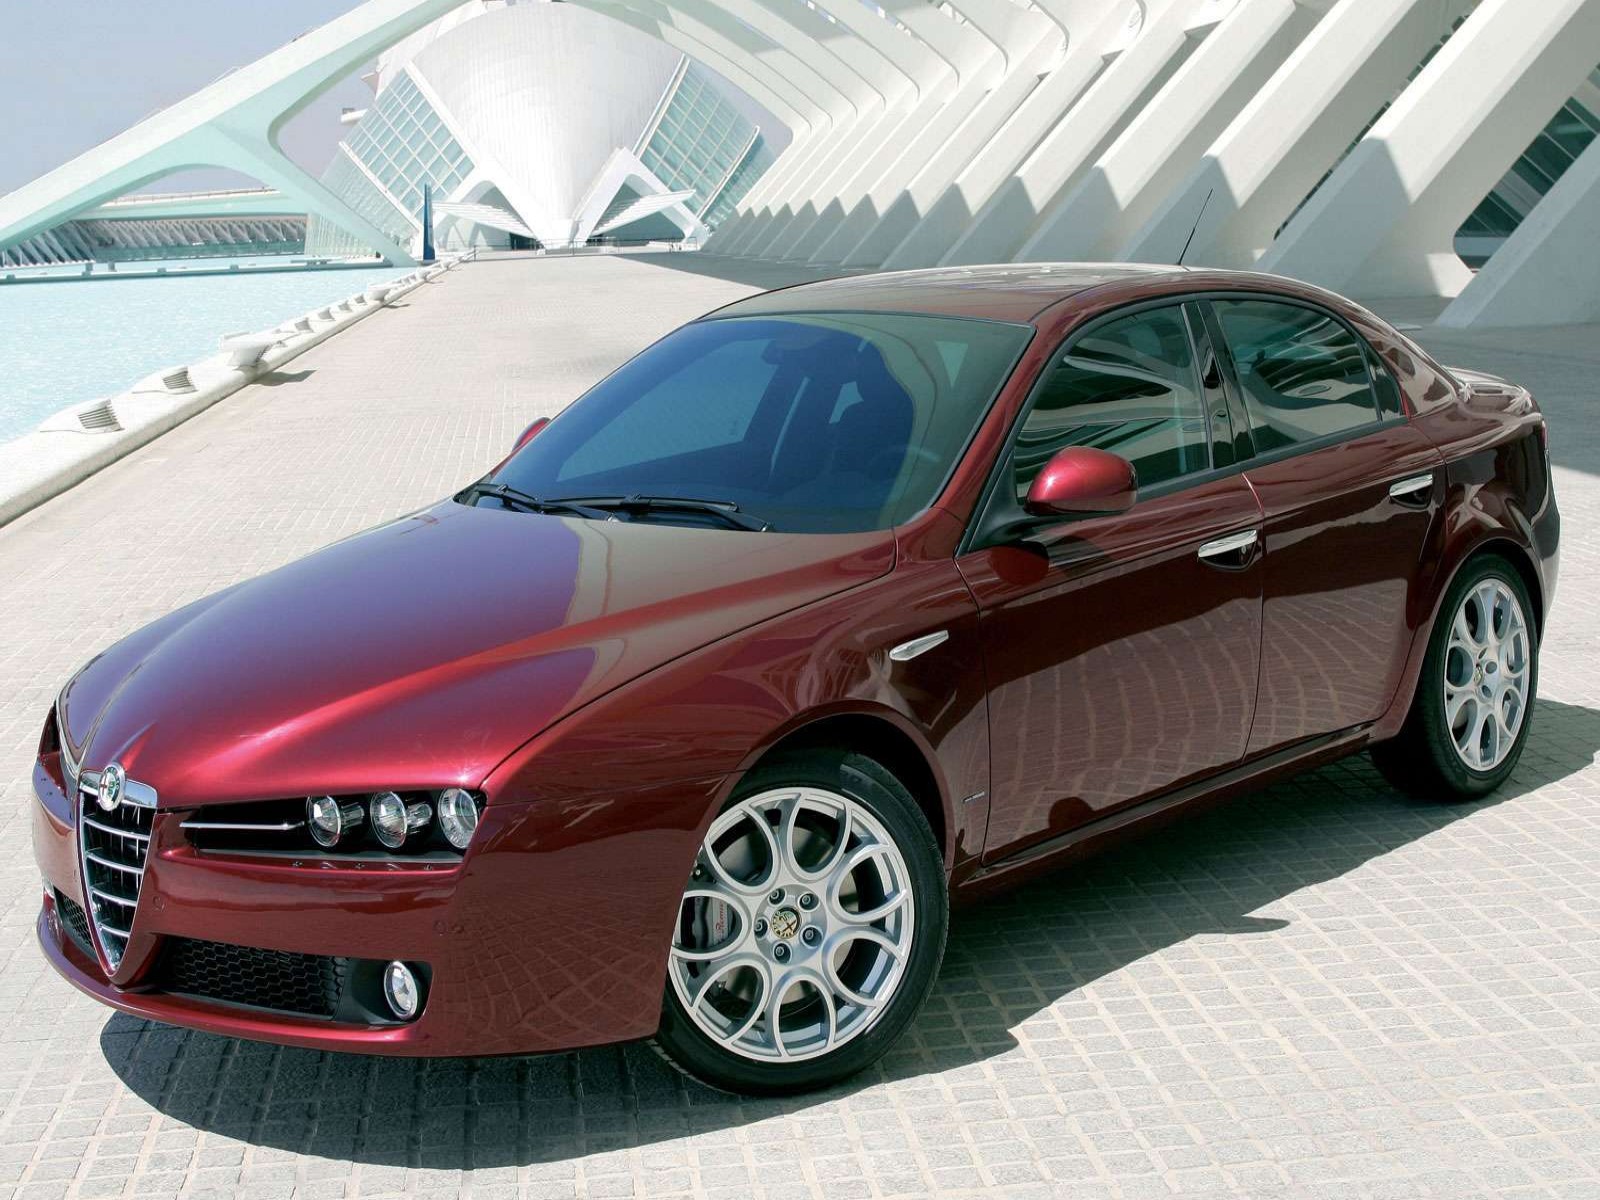 https://blogger.googleusercontent.com/img/b/R29vZ2xl/AVvXsEi2a3hQH6qT6vDfsgfPxHHhqFizE40l97V3XgvR9SJMl5m9XDUSmu8csHp71au9rDXzCU4RSf9pfjybOAGefP07NZoHy6vfDtqgSL5bxxH2WV44AgLP9Ll3ZNUGzAqbmq3v8u1rRHk6OeM/s1600/2005+Alfa+Romeo+159+-+Car+Psupero+Wallpaper.jpg